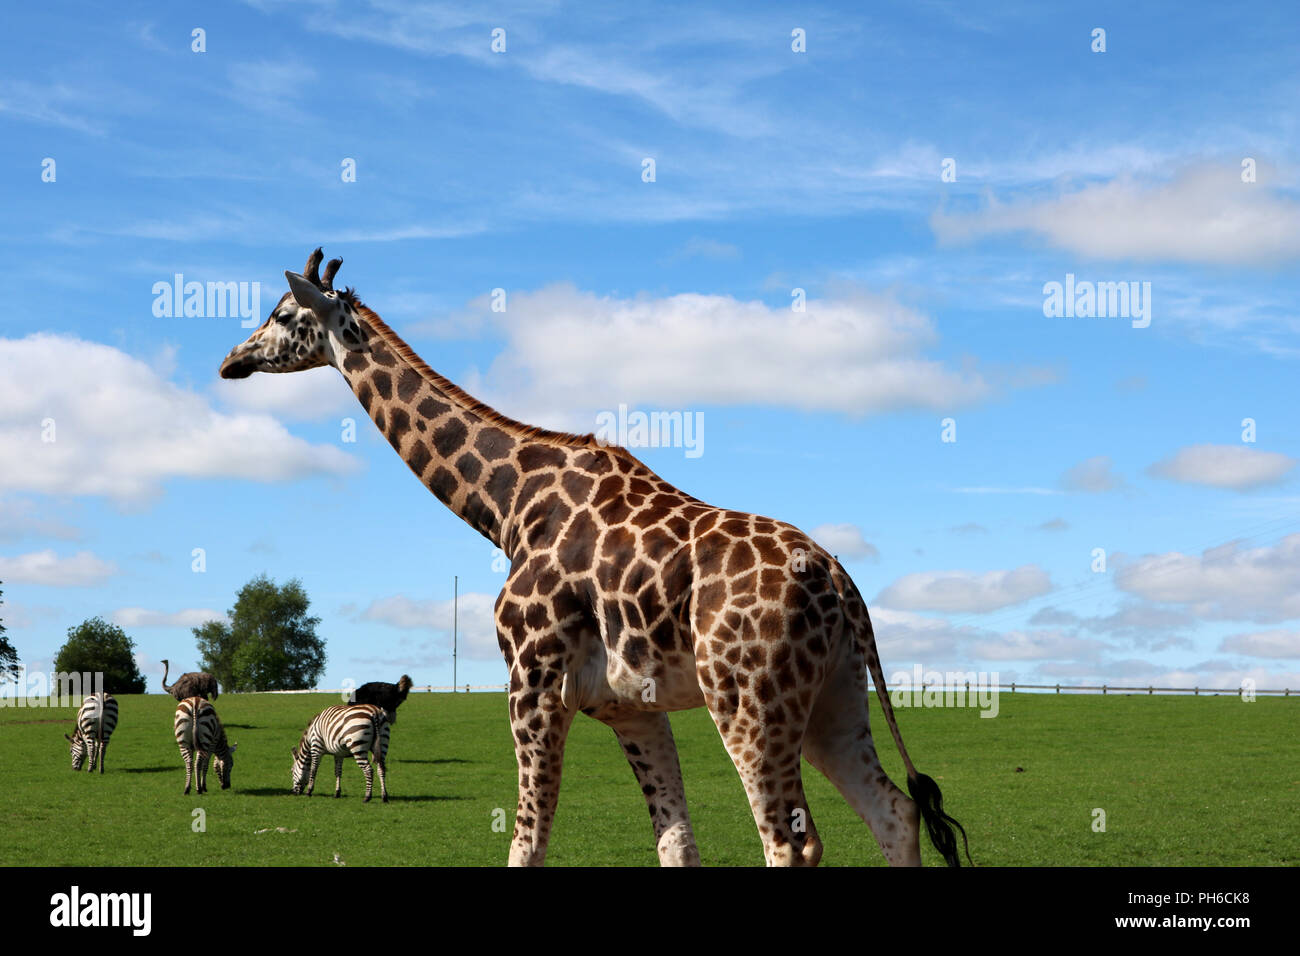 Giraffe at Fota wildlife park Stock Photo